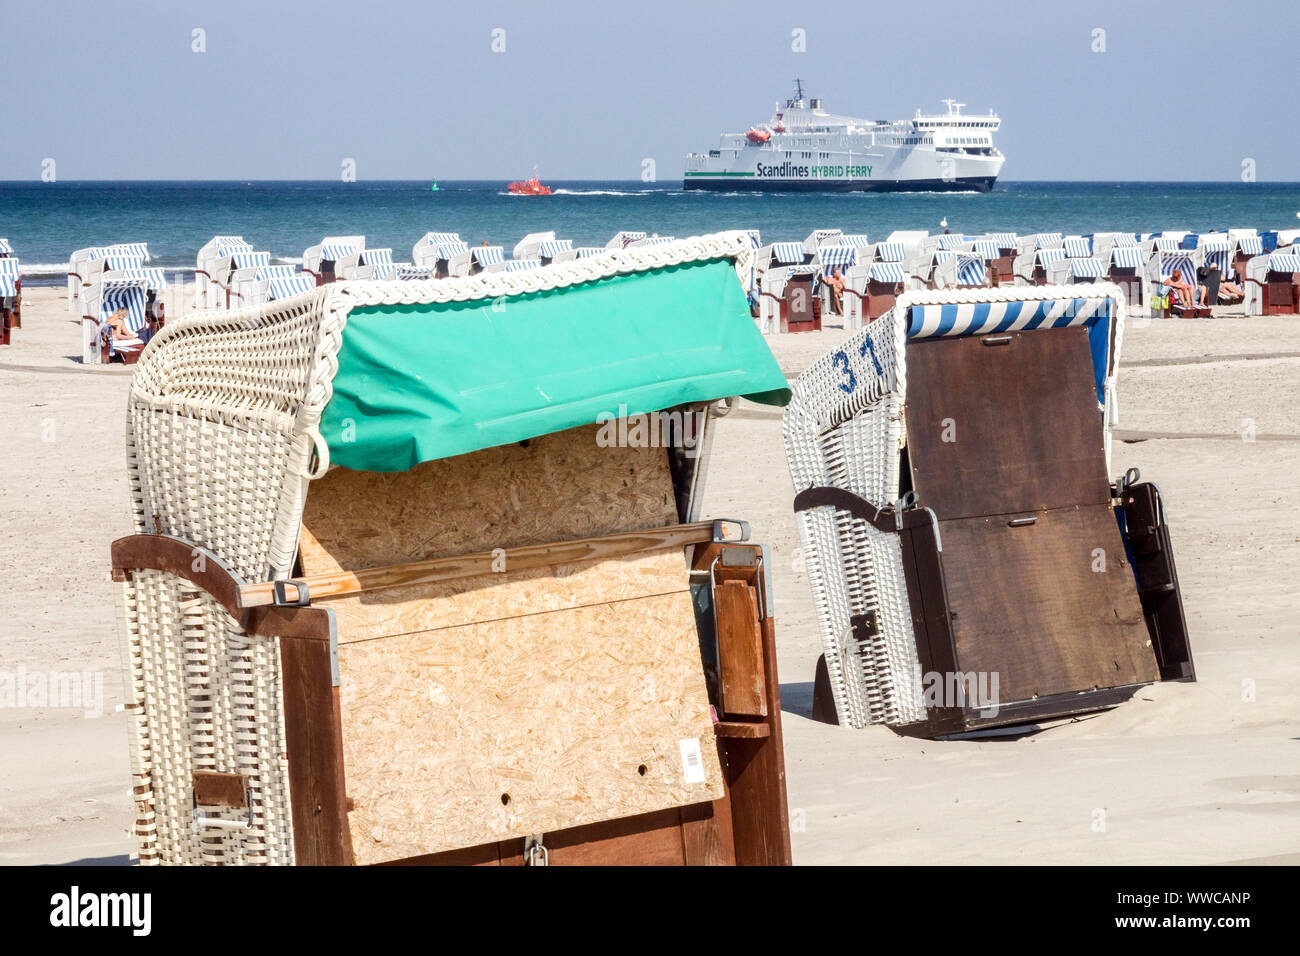 Germany Sea, the coast of Baltic Sea, Warnemunde beach chairs, ferry boat Stock Photo